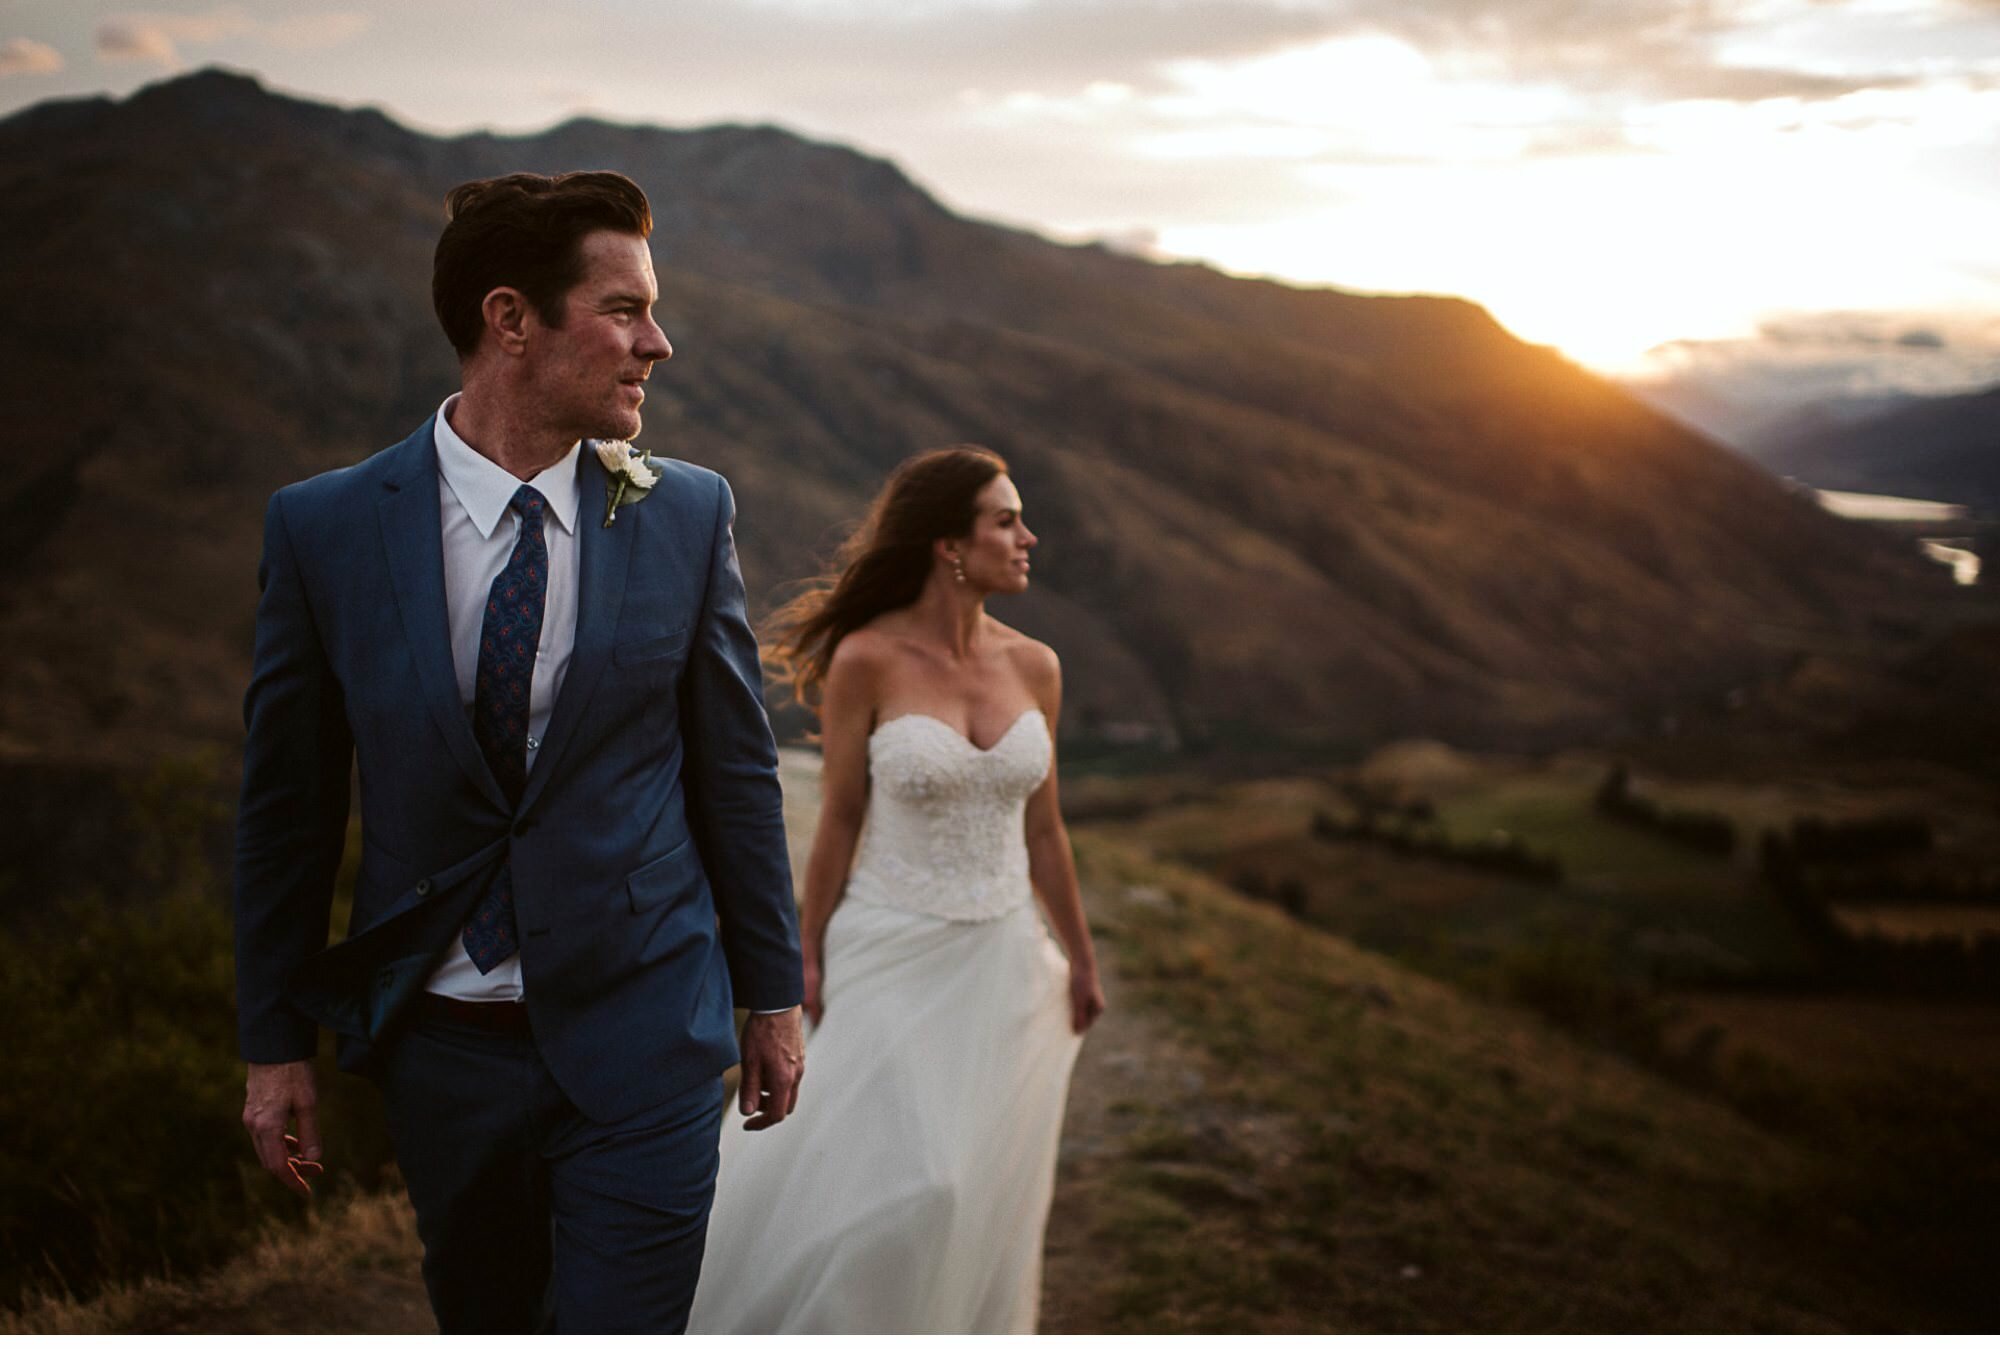 012 - New Zealand Wedding Photography Highlights.jpg